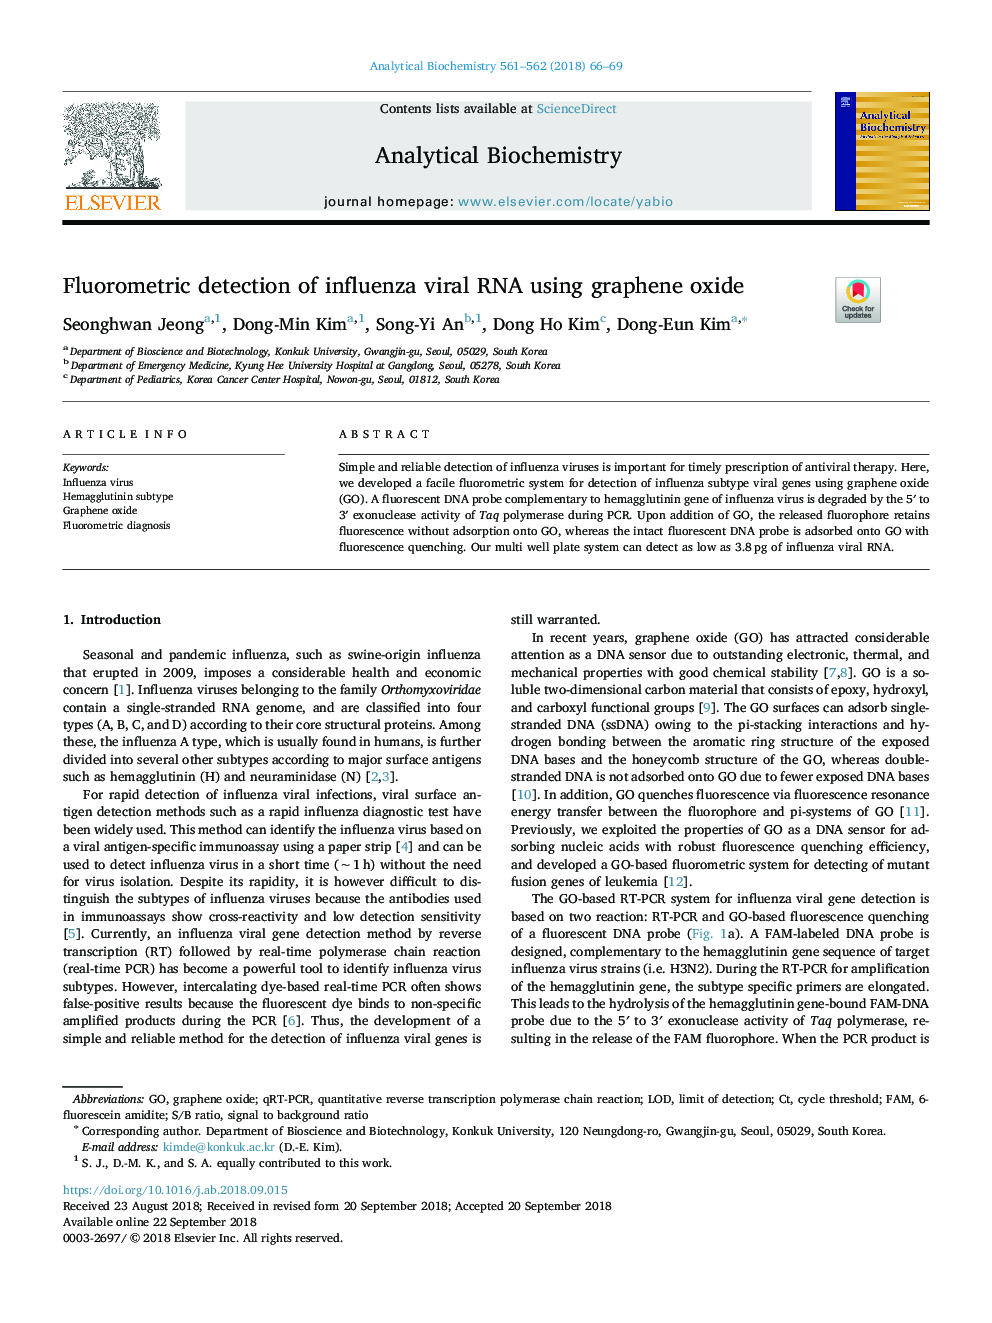 Fluorometric detection of influenza viral RNA using graphene oxide